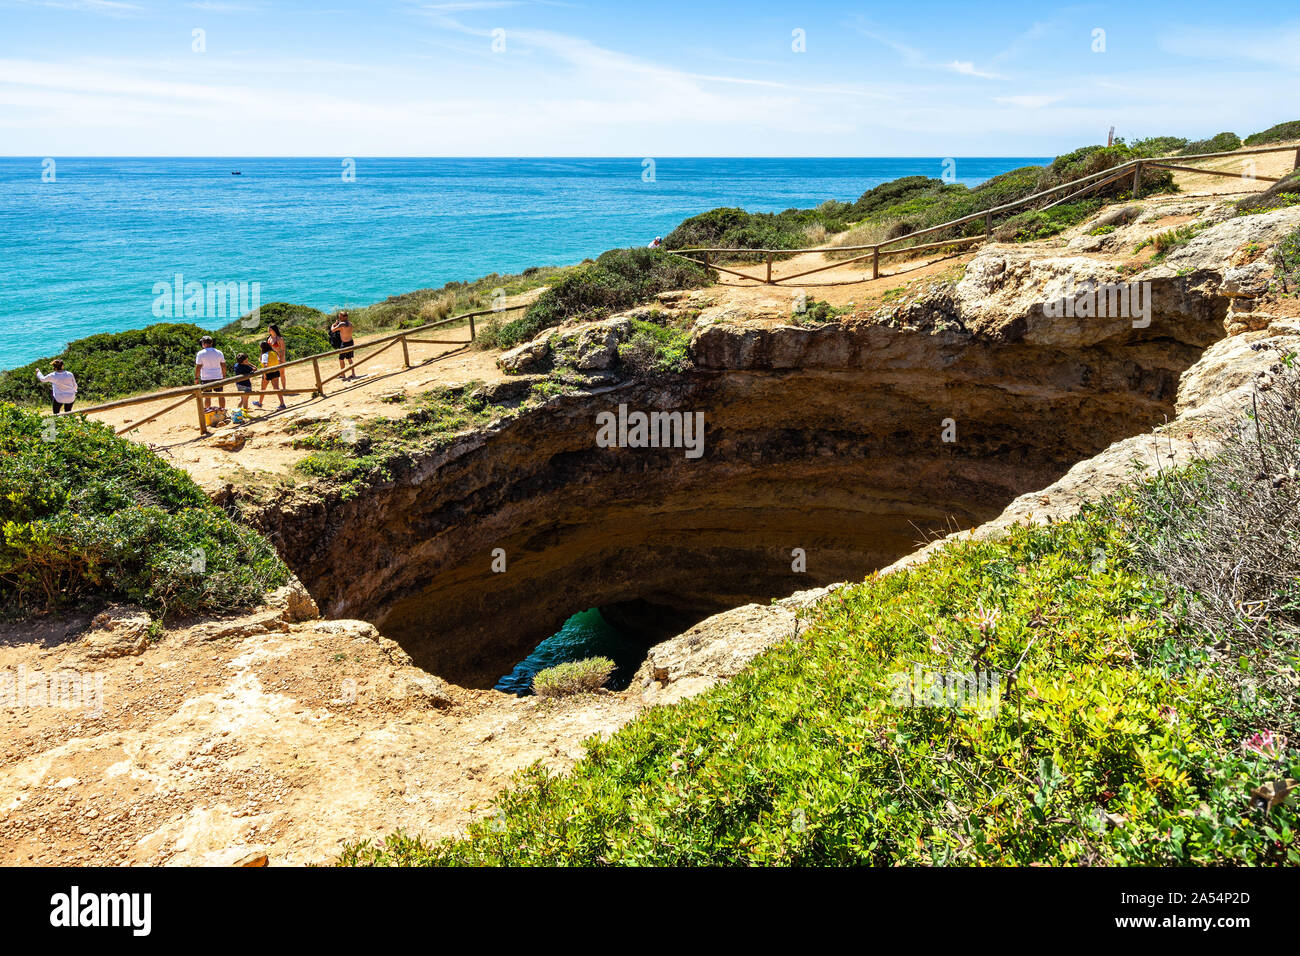 The big hole on the cliffs above the Benagil cave (Algar de Banagil). Lagoa, Algarve, Portugal, April 2019 Stock Photo